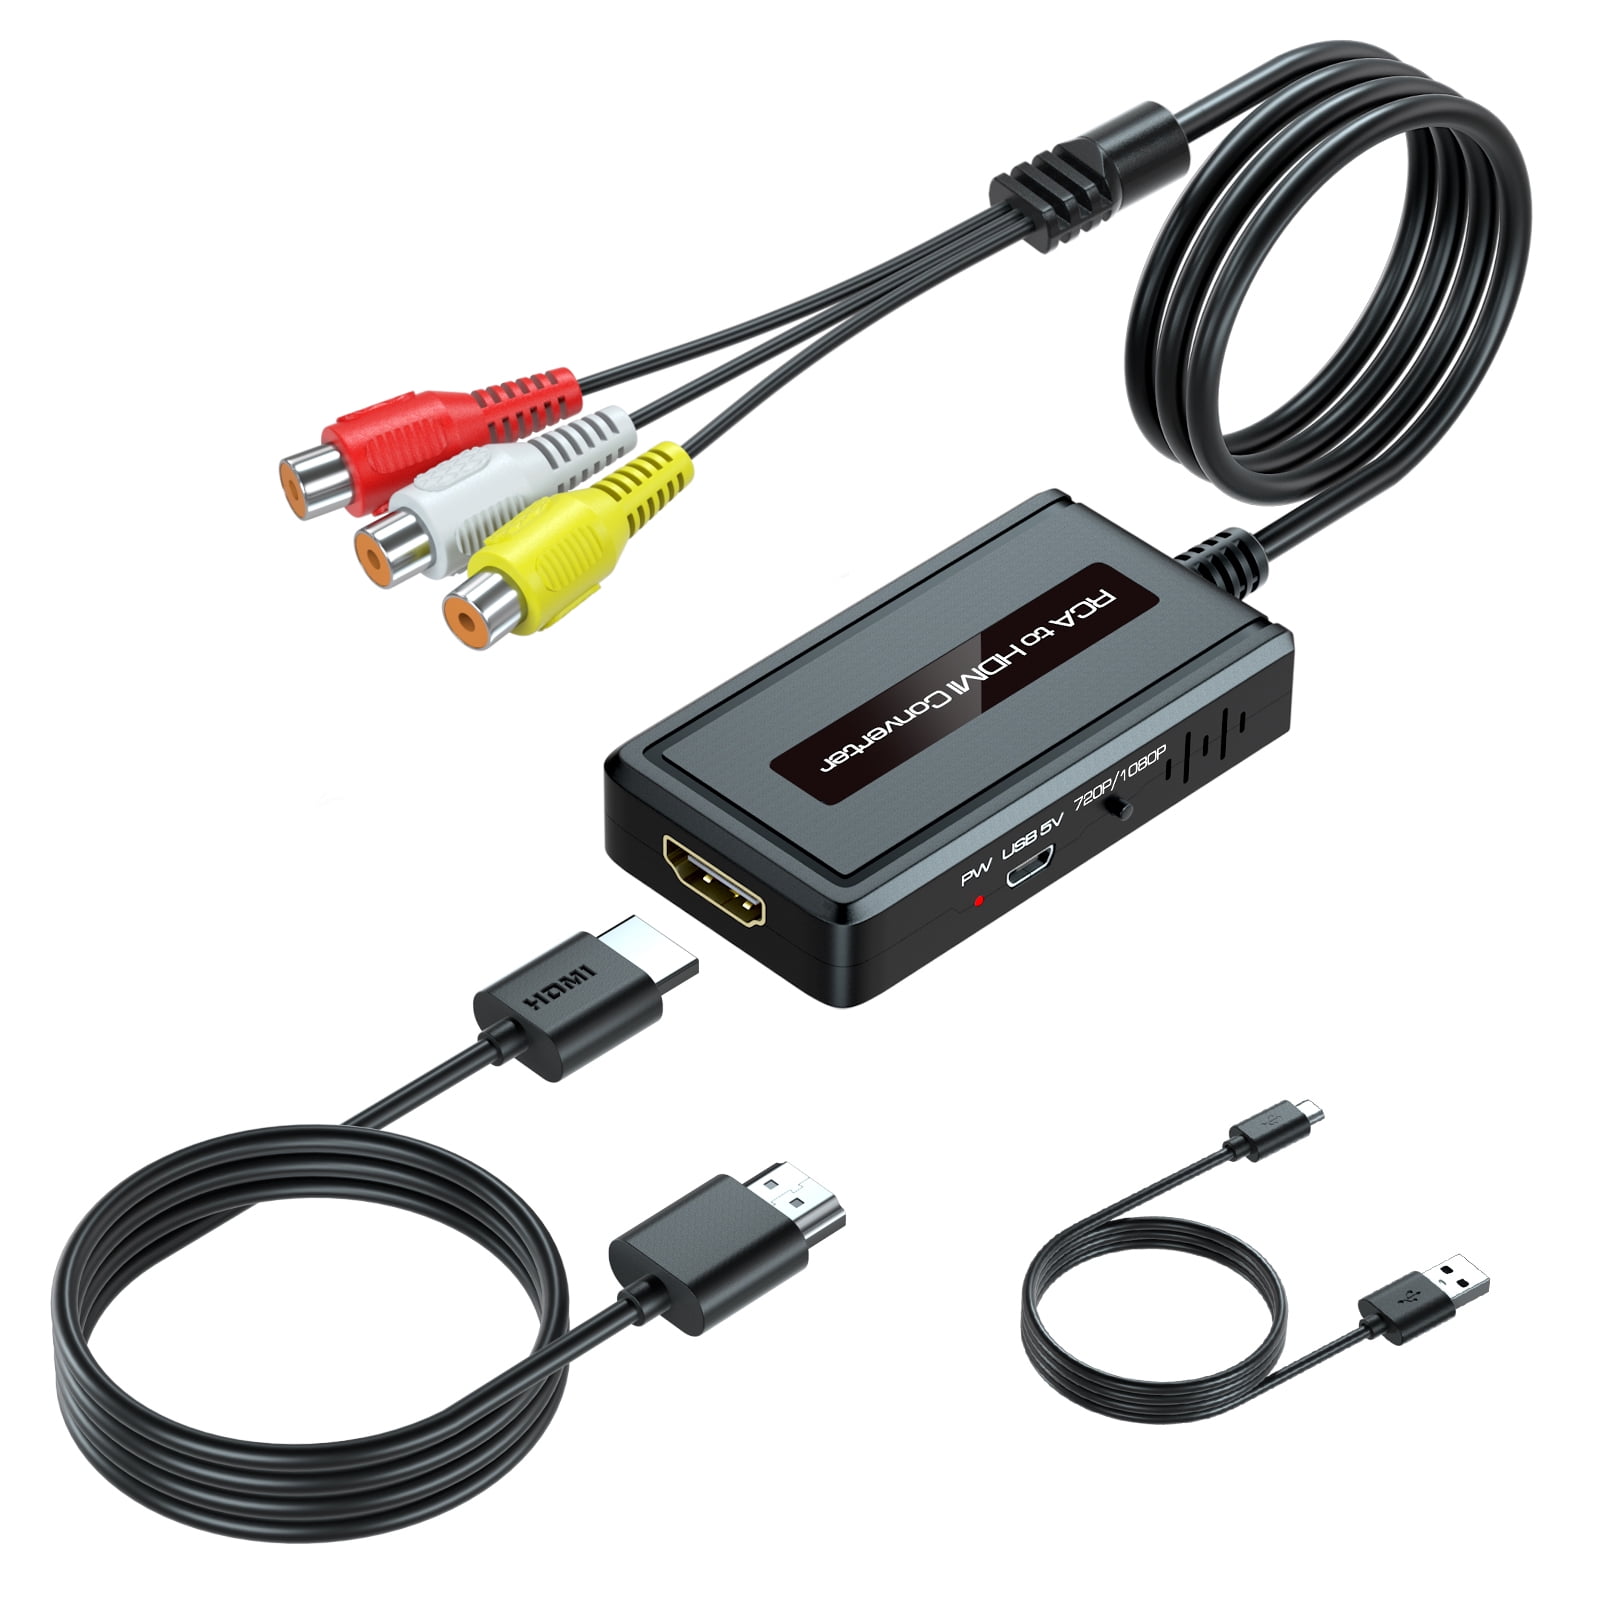  Convertidor AV a HDMI, adaptador RCA/Compuesto/CVBS a HDMI,  compatible con interruptor 16:9/4:3 compatible con  Wii/N64/PS1/PS2/PS3/VHS/VCR/DVD, etc. (convertidor RCA de 4 puertos a 1 HDMI  con control : Electrónica